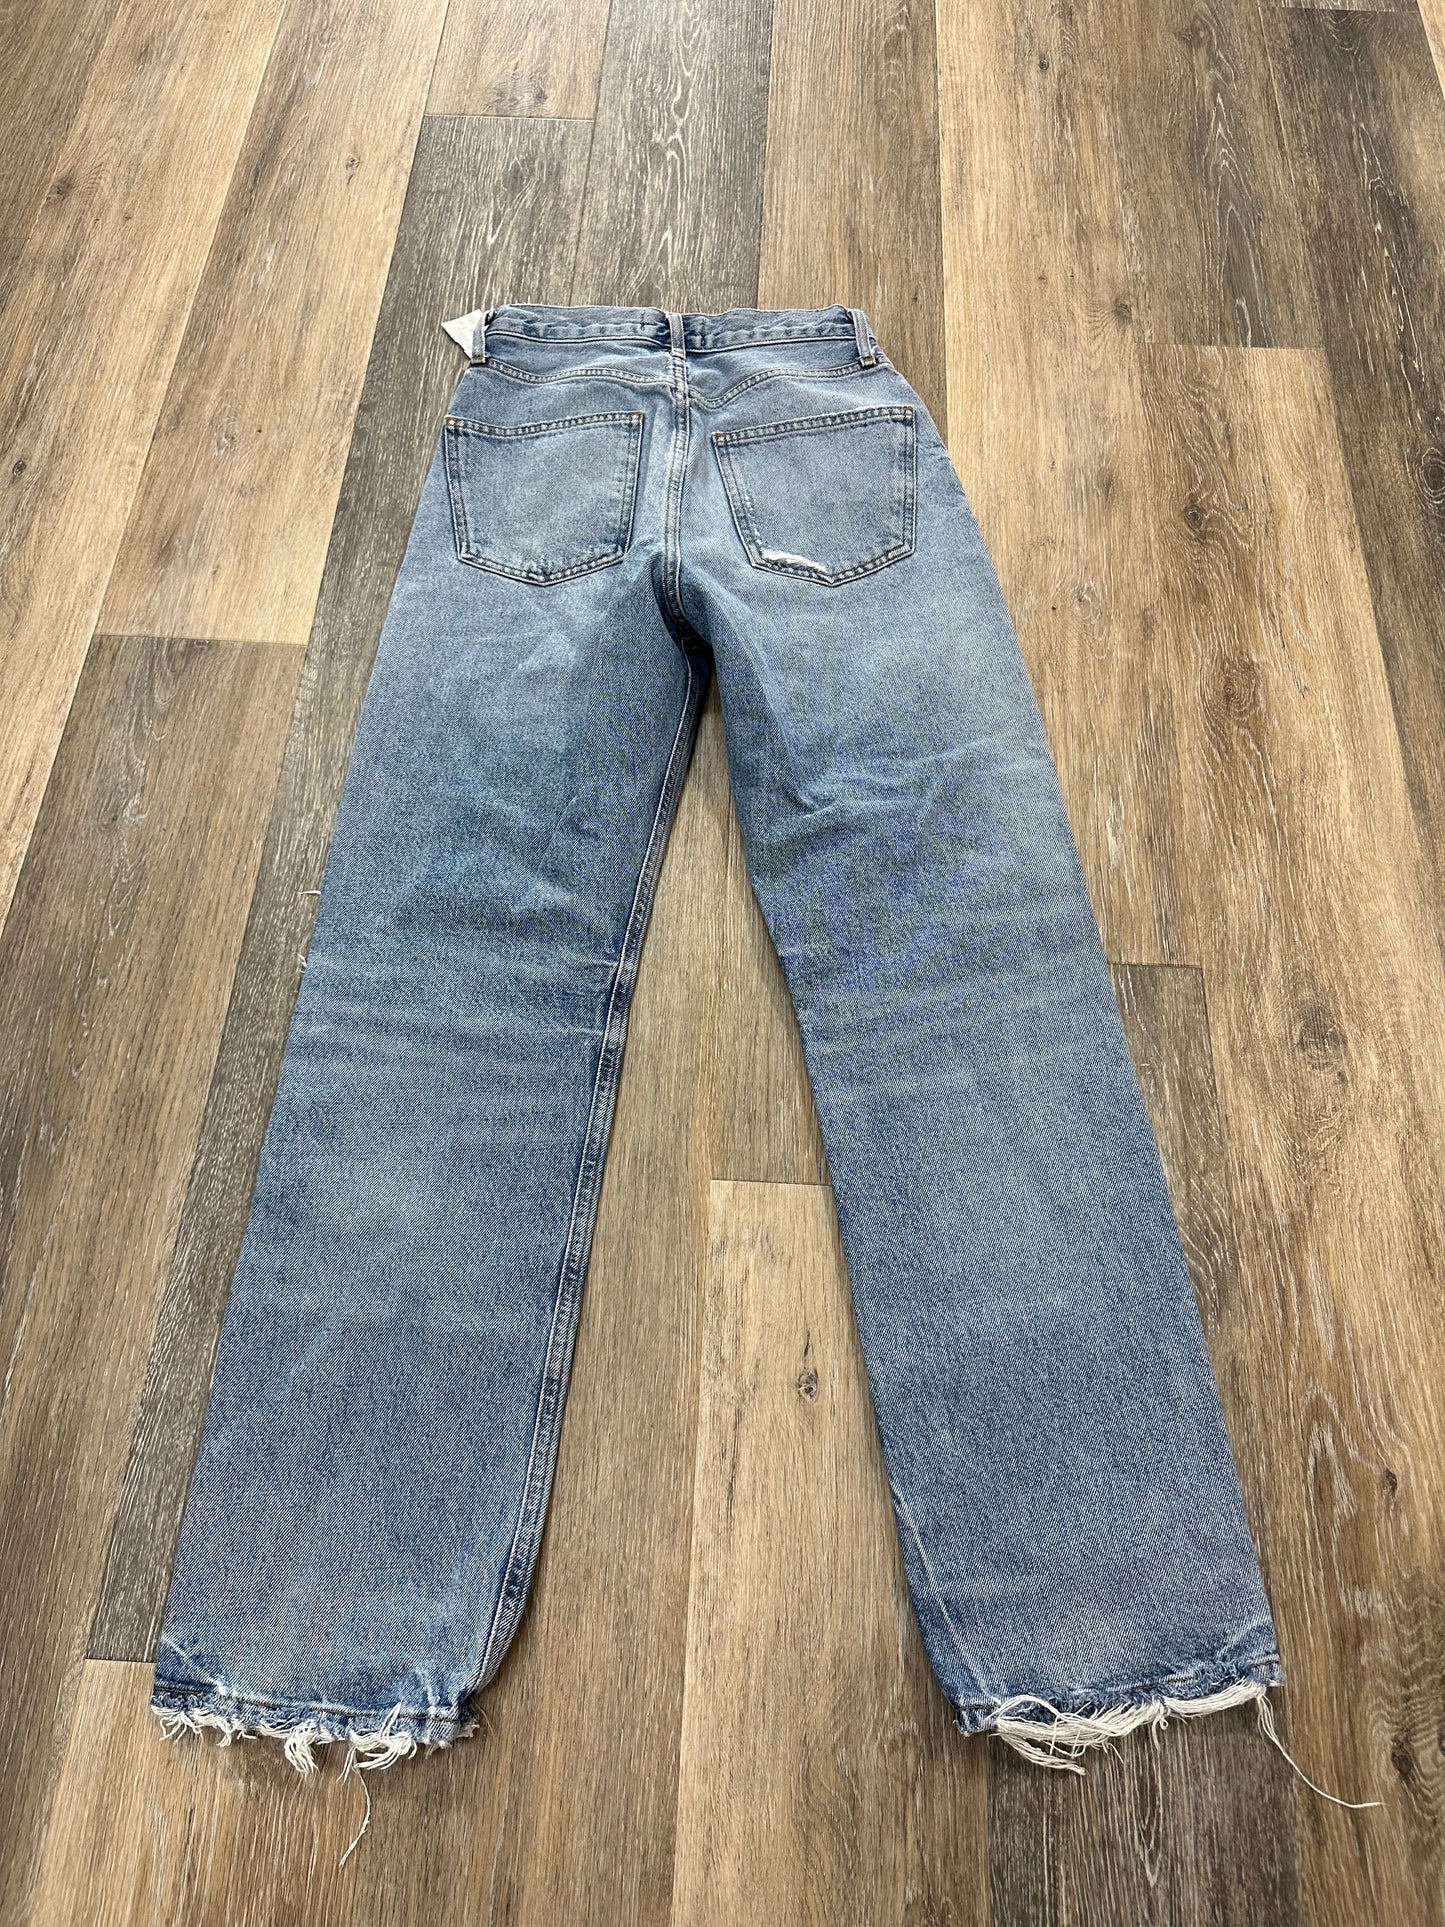 Jeans Designer By Agolde  Size: 0/24